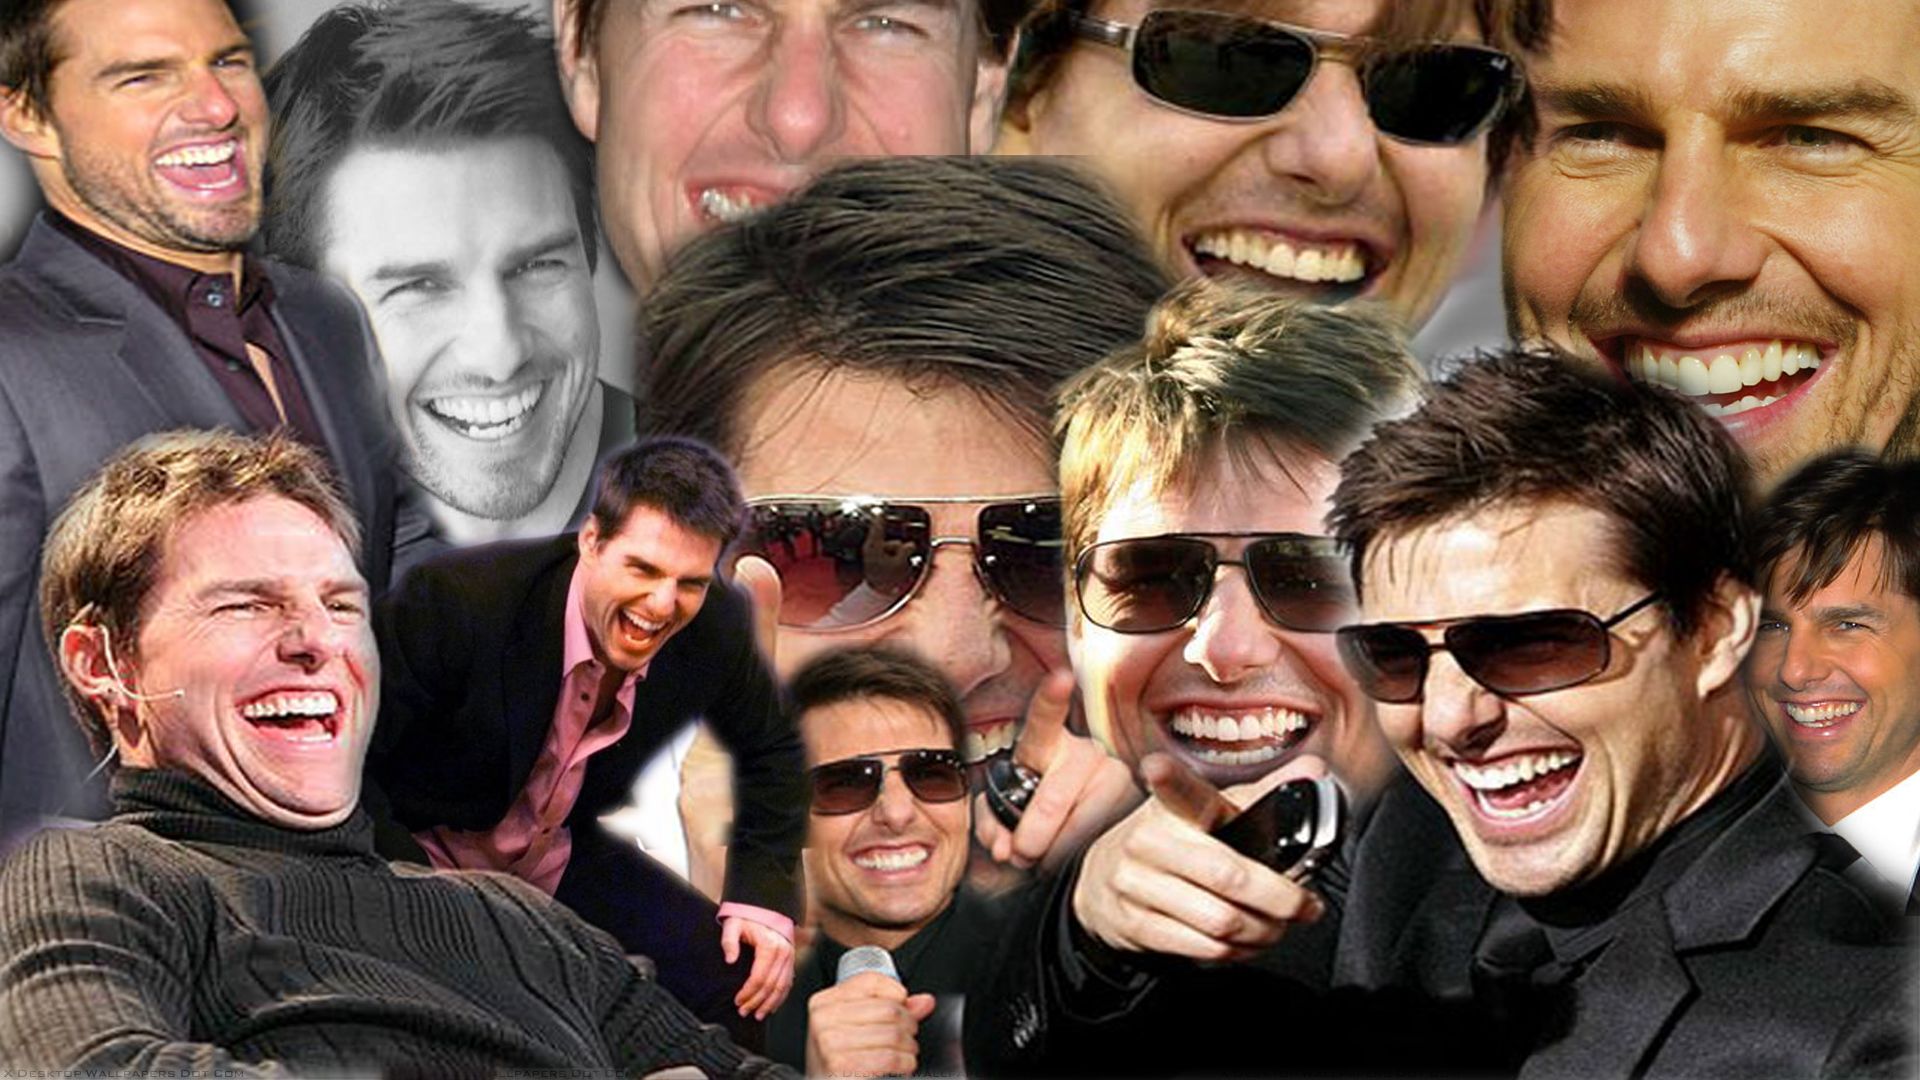 Tom Cruise Laughing HD Wallpaper 1920x1080 ID45629 Happy